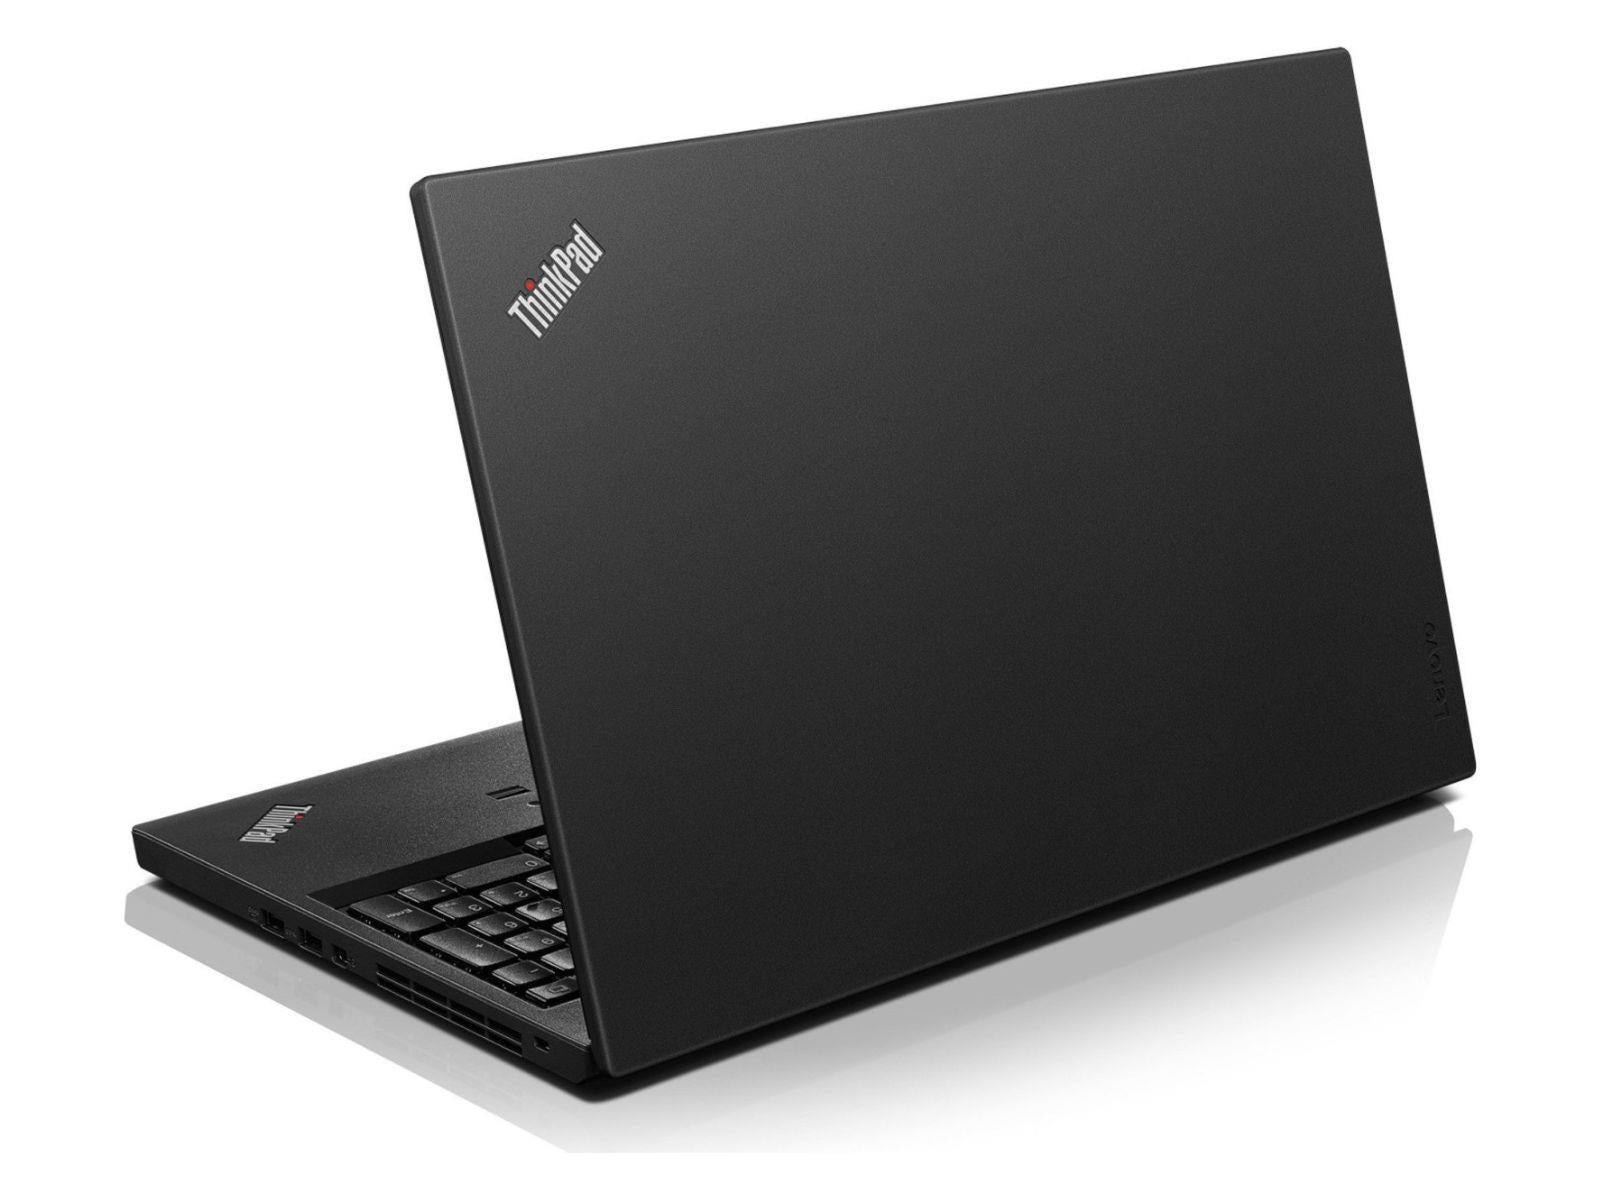 Lenovo ThinkPad T560 Back View